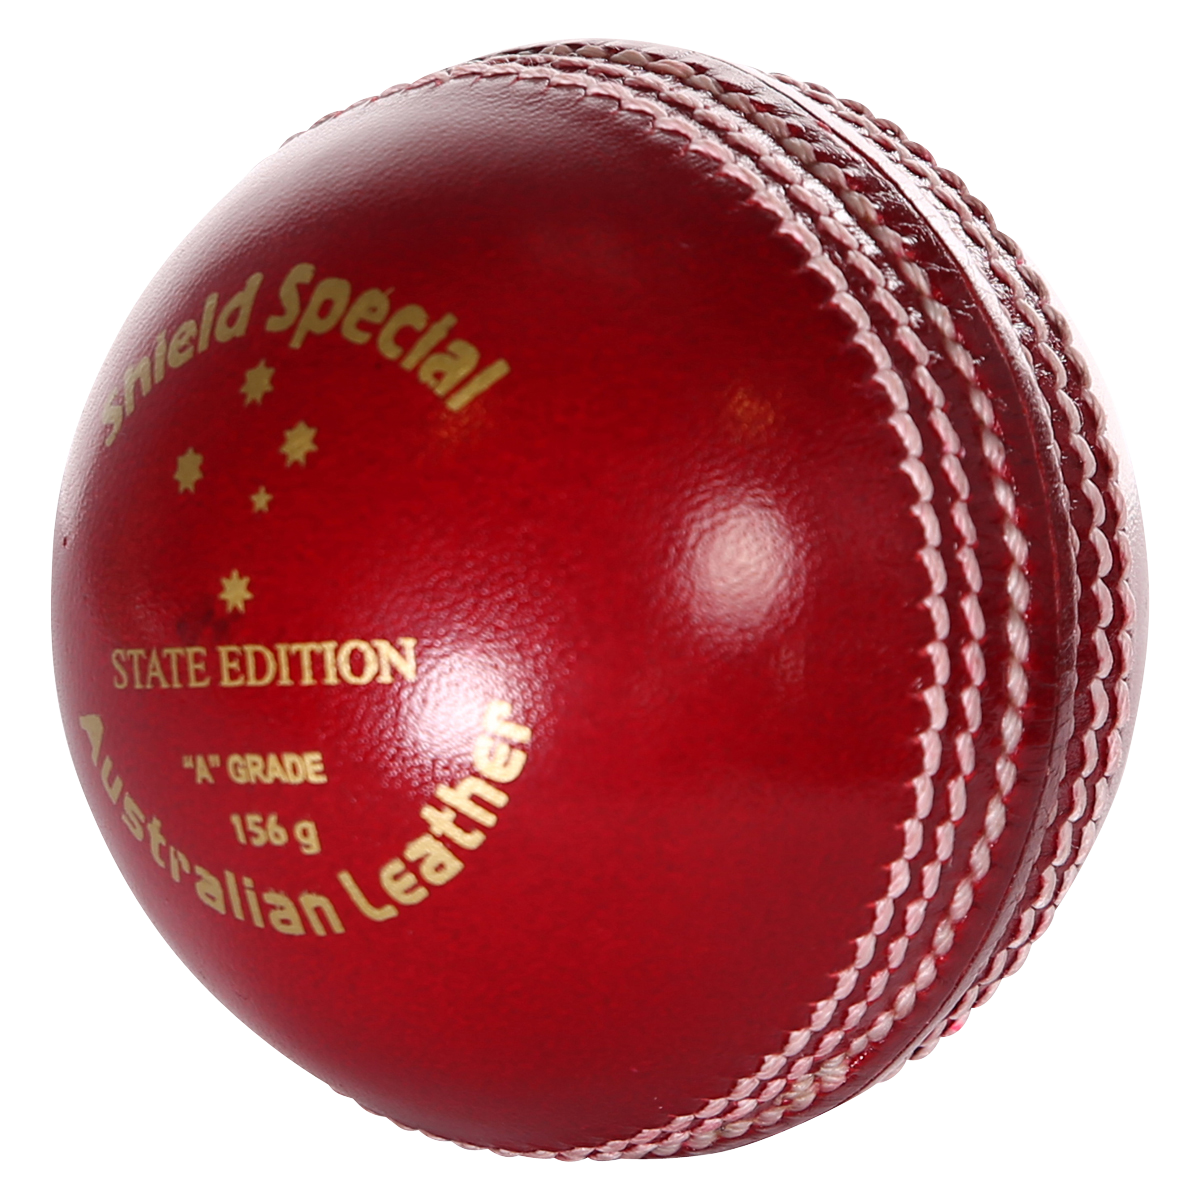 Ball bit. Cricket Ball игра. Мячик для крикета. Мяч для игры в крикет. Мячик для лапты.